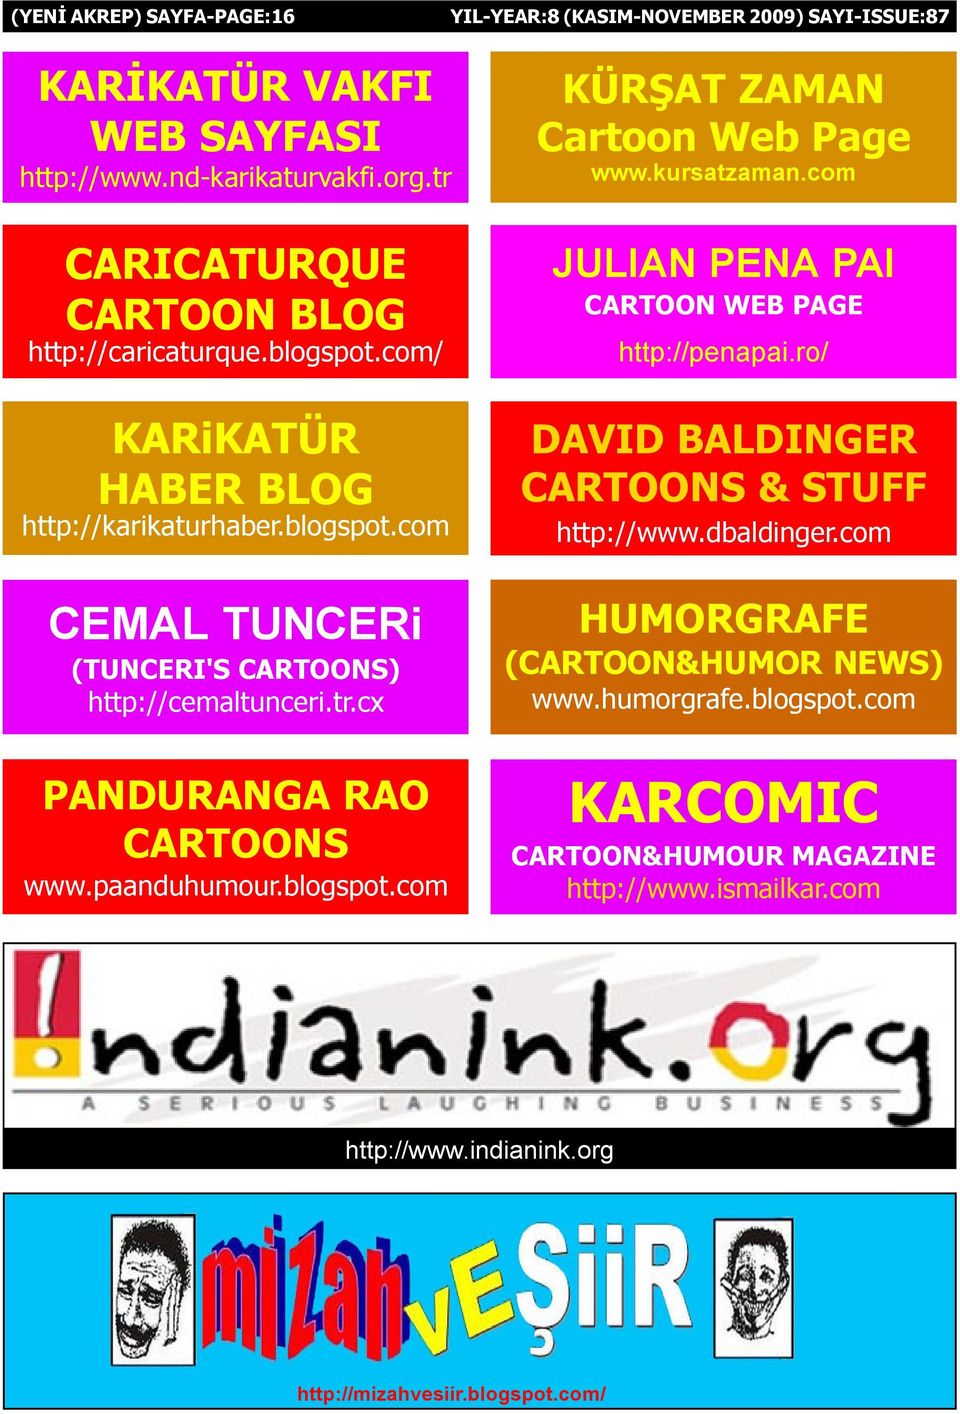 blogspot.com KÜRÞAT ZAMAN Cartoon Web Page www.kursatzaman.com JULIAN PENA PAI CARTOON WEB PAGE http://penapai.ro/ DAVID BALDINGER CARTOONS & STUFF http://www.